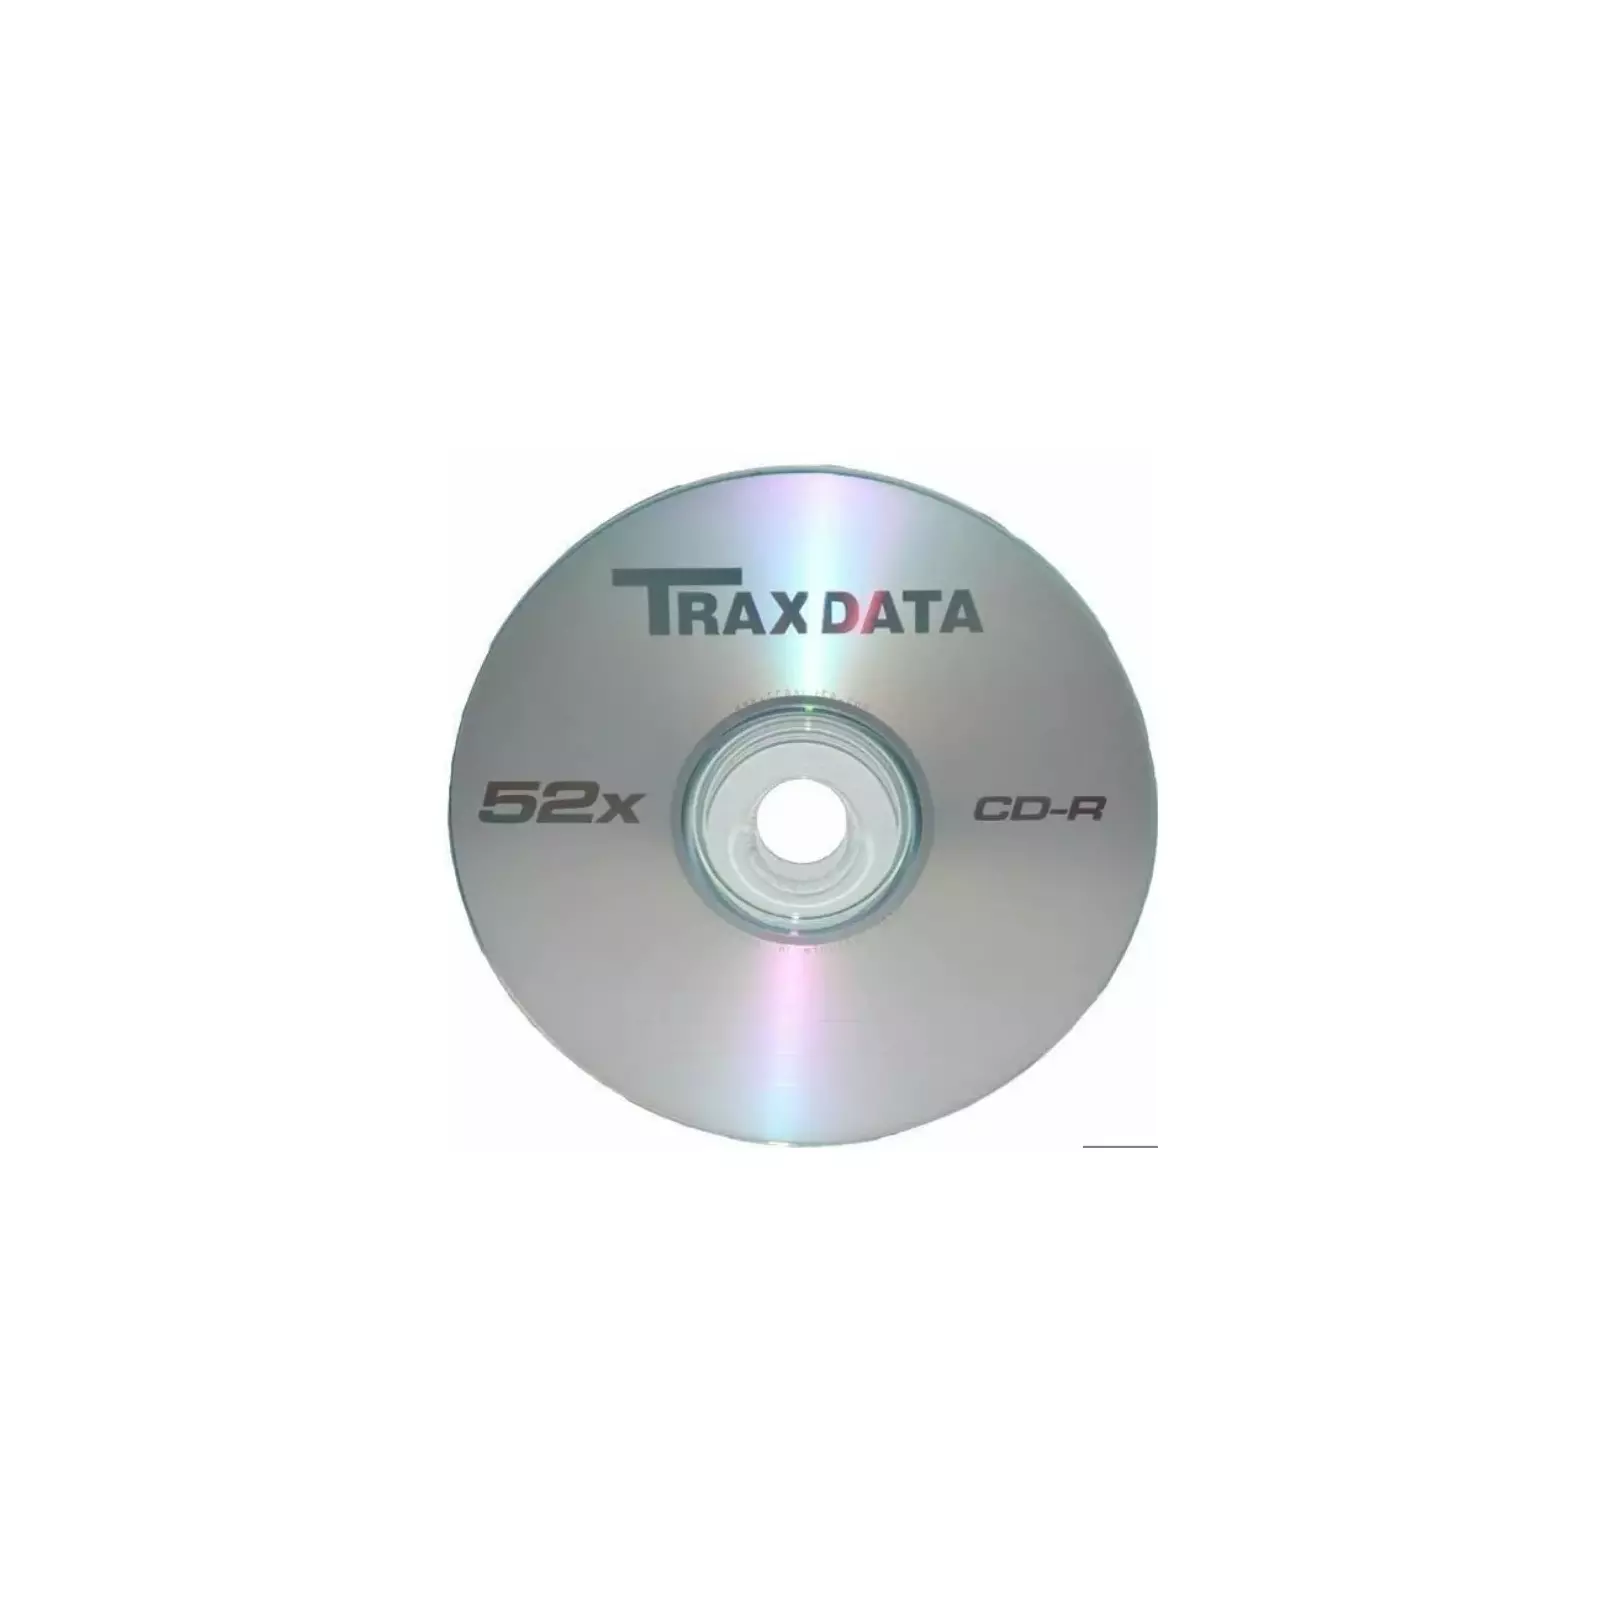 Traxdata TRX-CD Photo 1